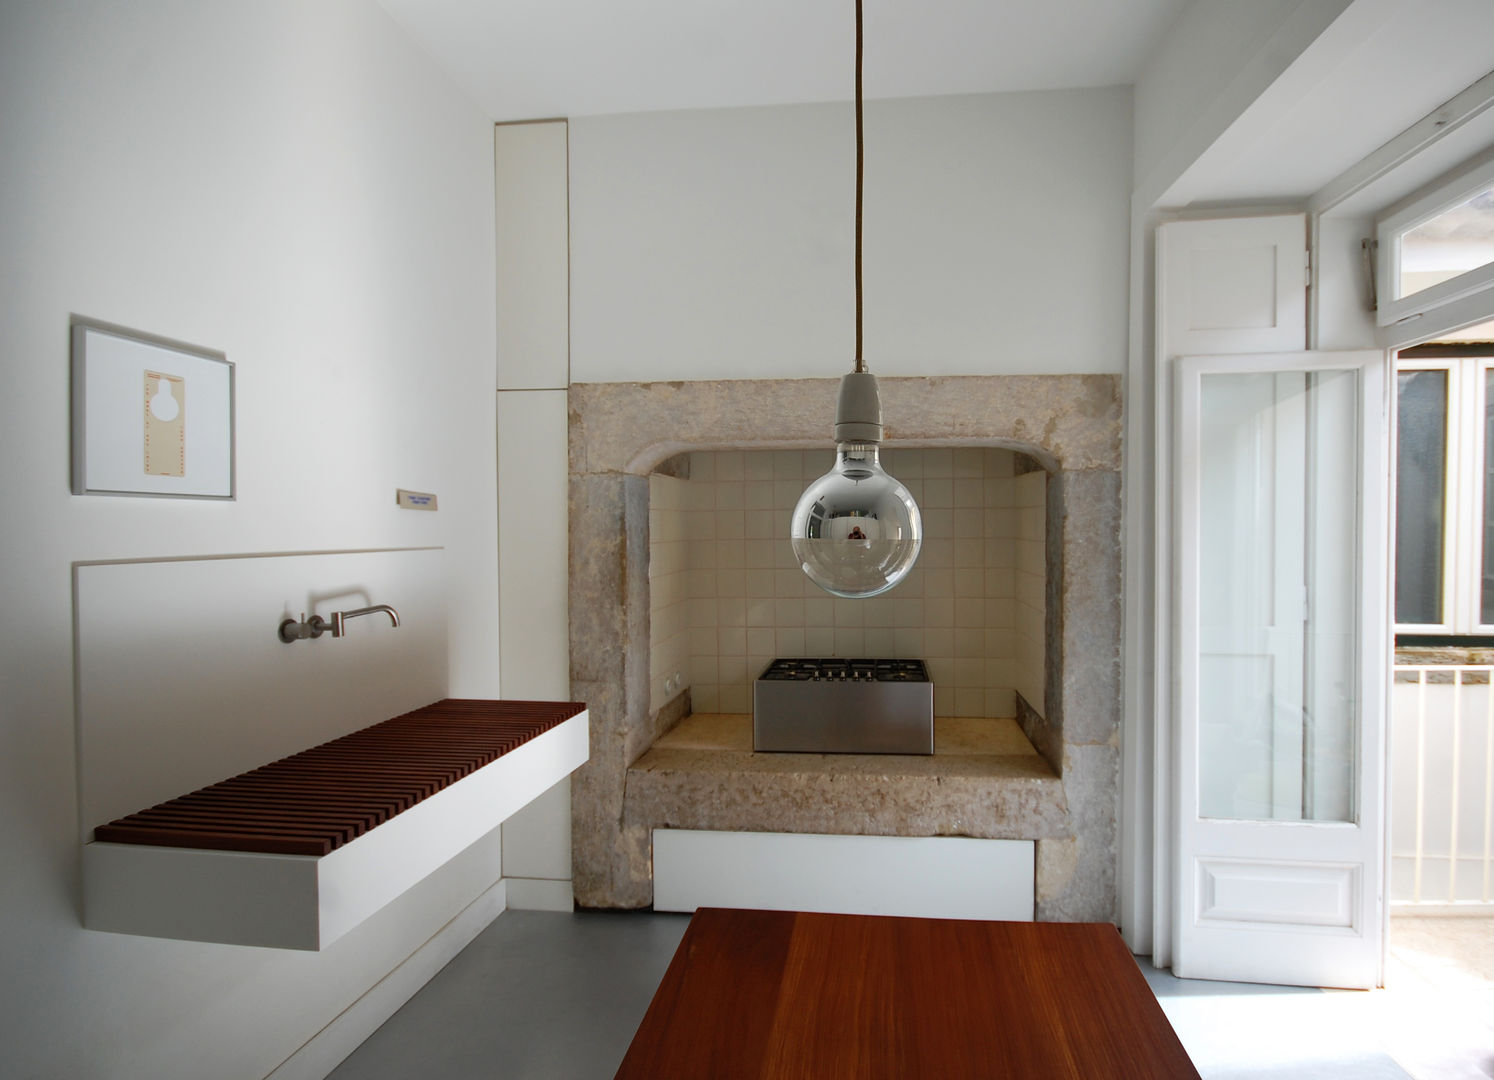 Apartamento Pedras Negras (2012), pedro pacheco arquitectos pedro pacheco arquitectos Nhà bếp phong cách tối giản